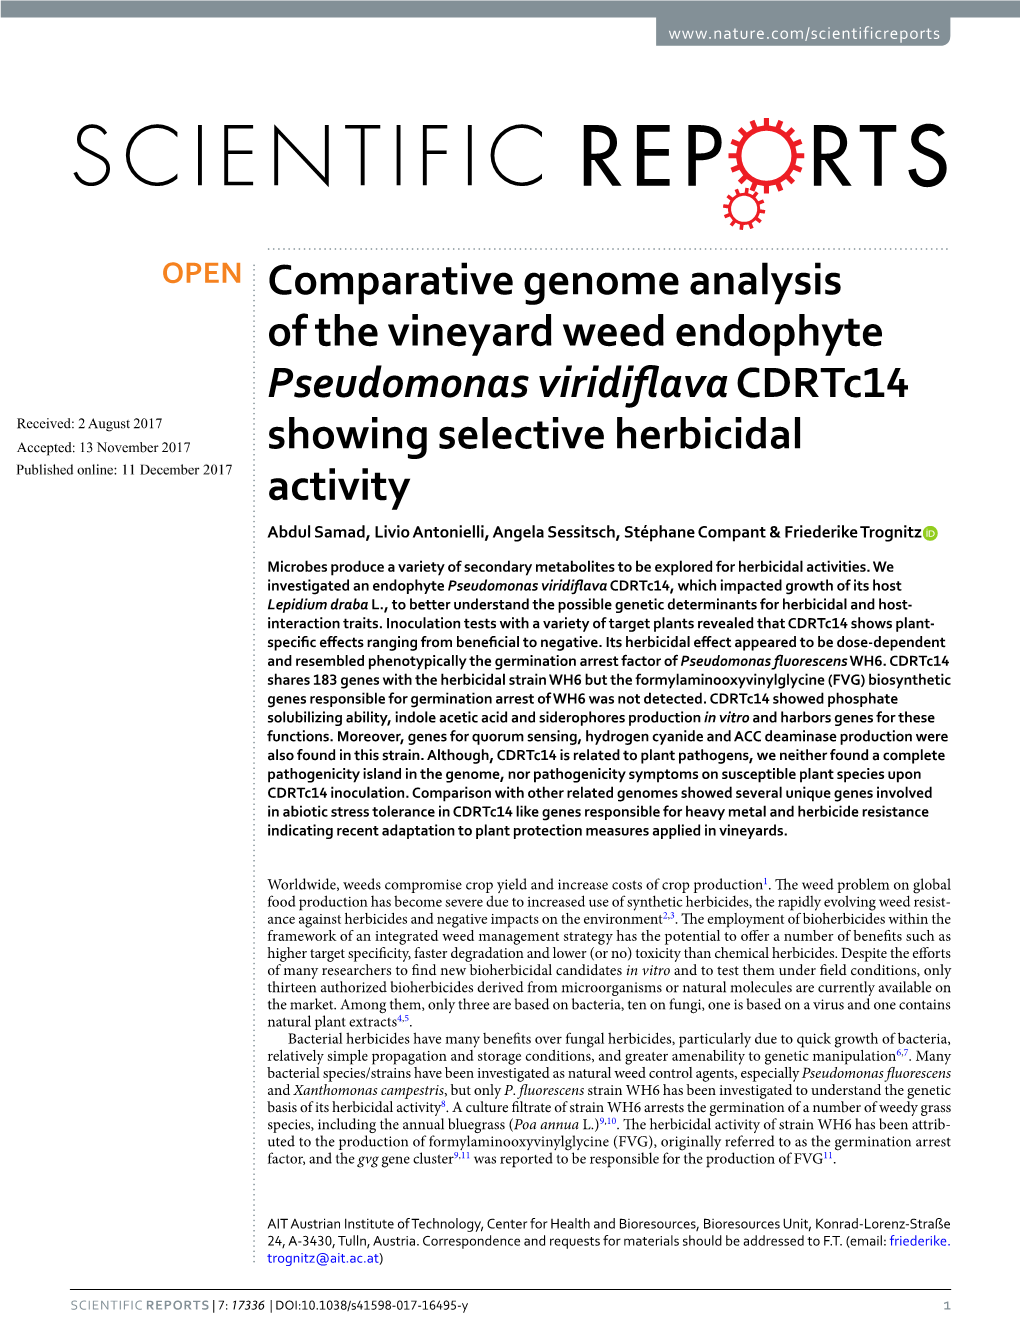 Comparative Genome Analysis of the Vineyard Weed Endophyte Pseudomonas Viridiflava Cdrtc14 Showing Selective Herbicidal Activity